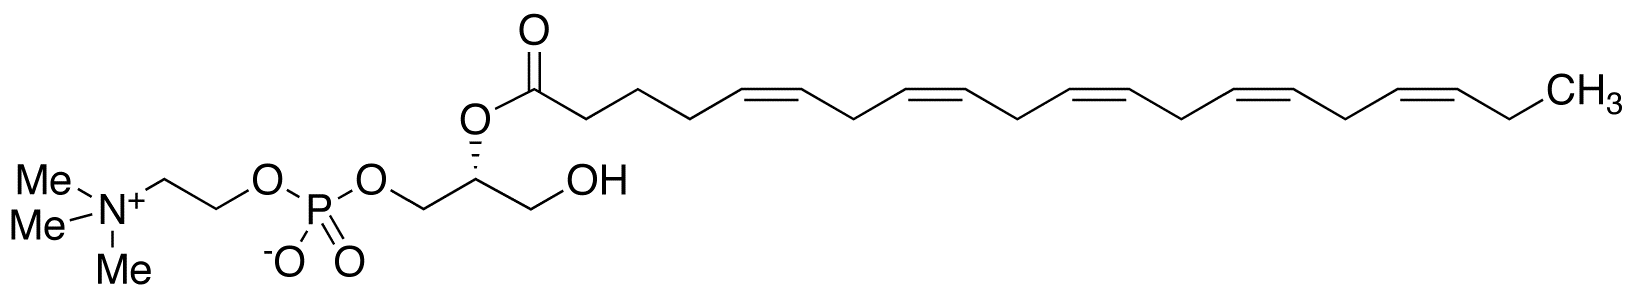 2-Eicosapentaenoyl-sn-glycerol-3-phosphocholine